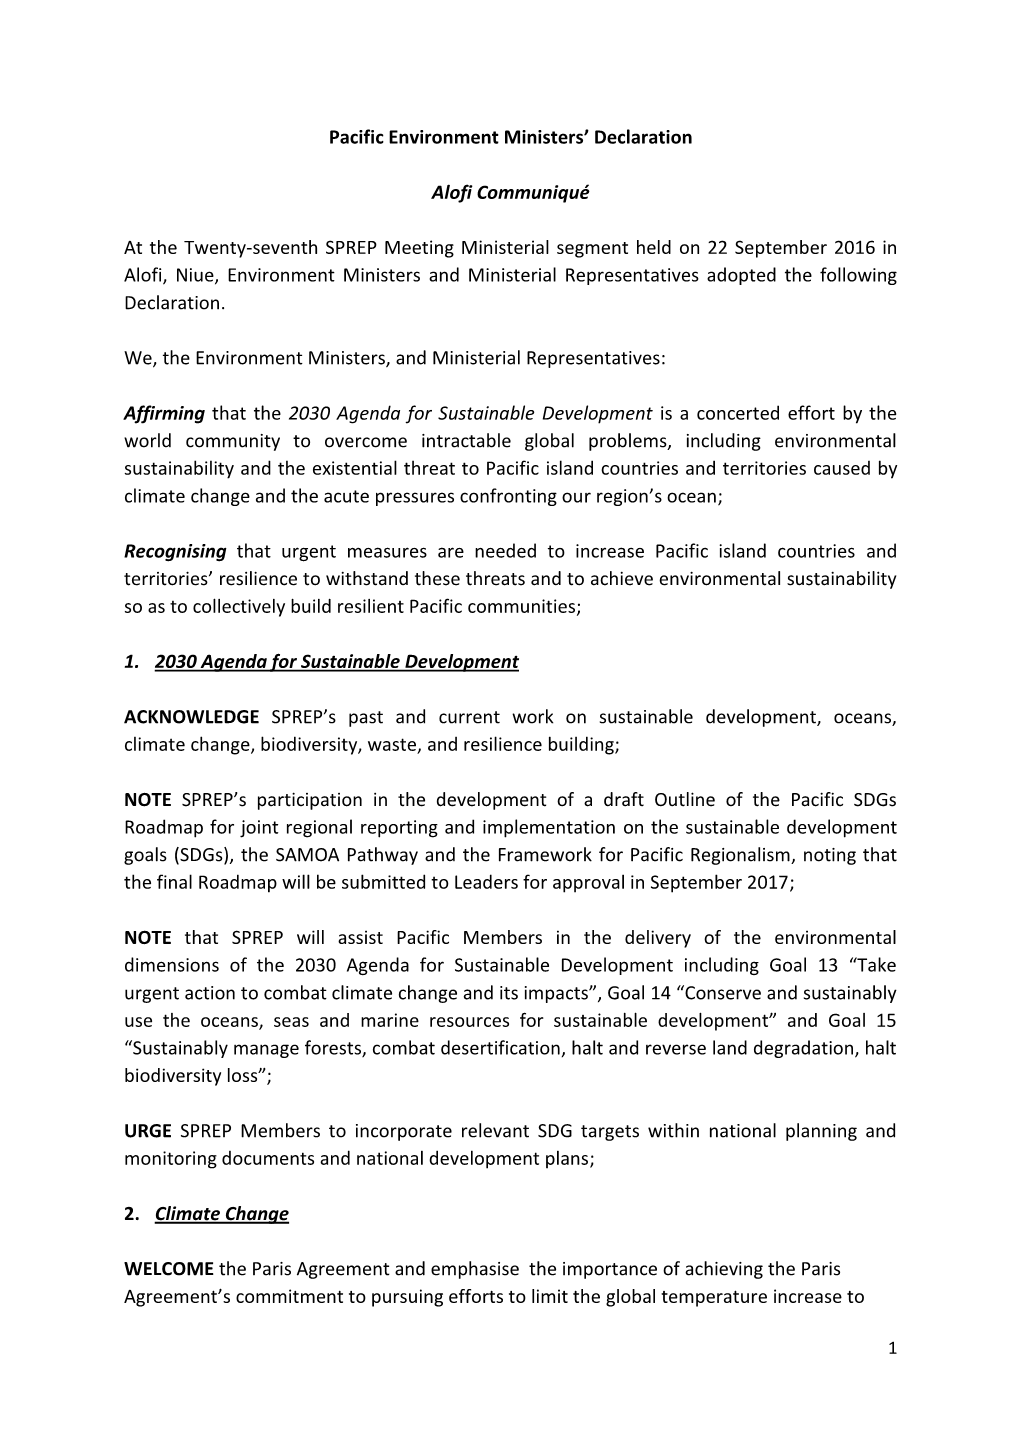 Pacific Environment Ministers' Declaration Alofi Communiqué at the Twenty-Seventh SPREP Meeting Ministerial Segment Held on 2